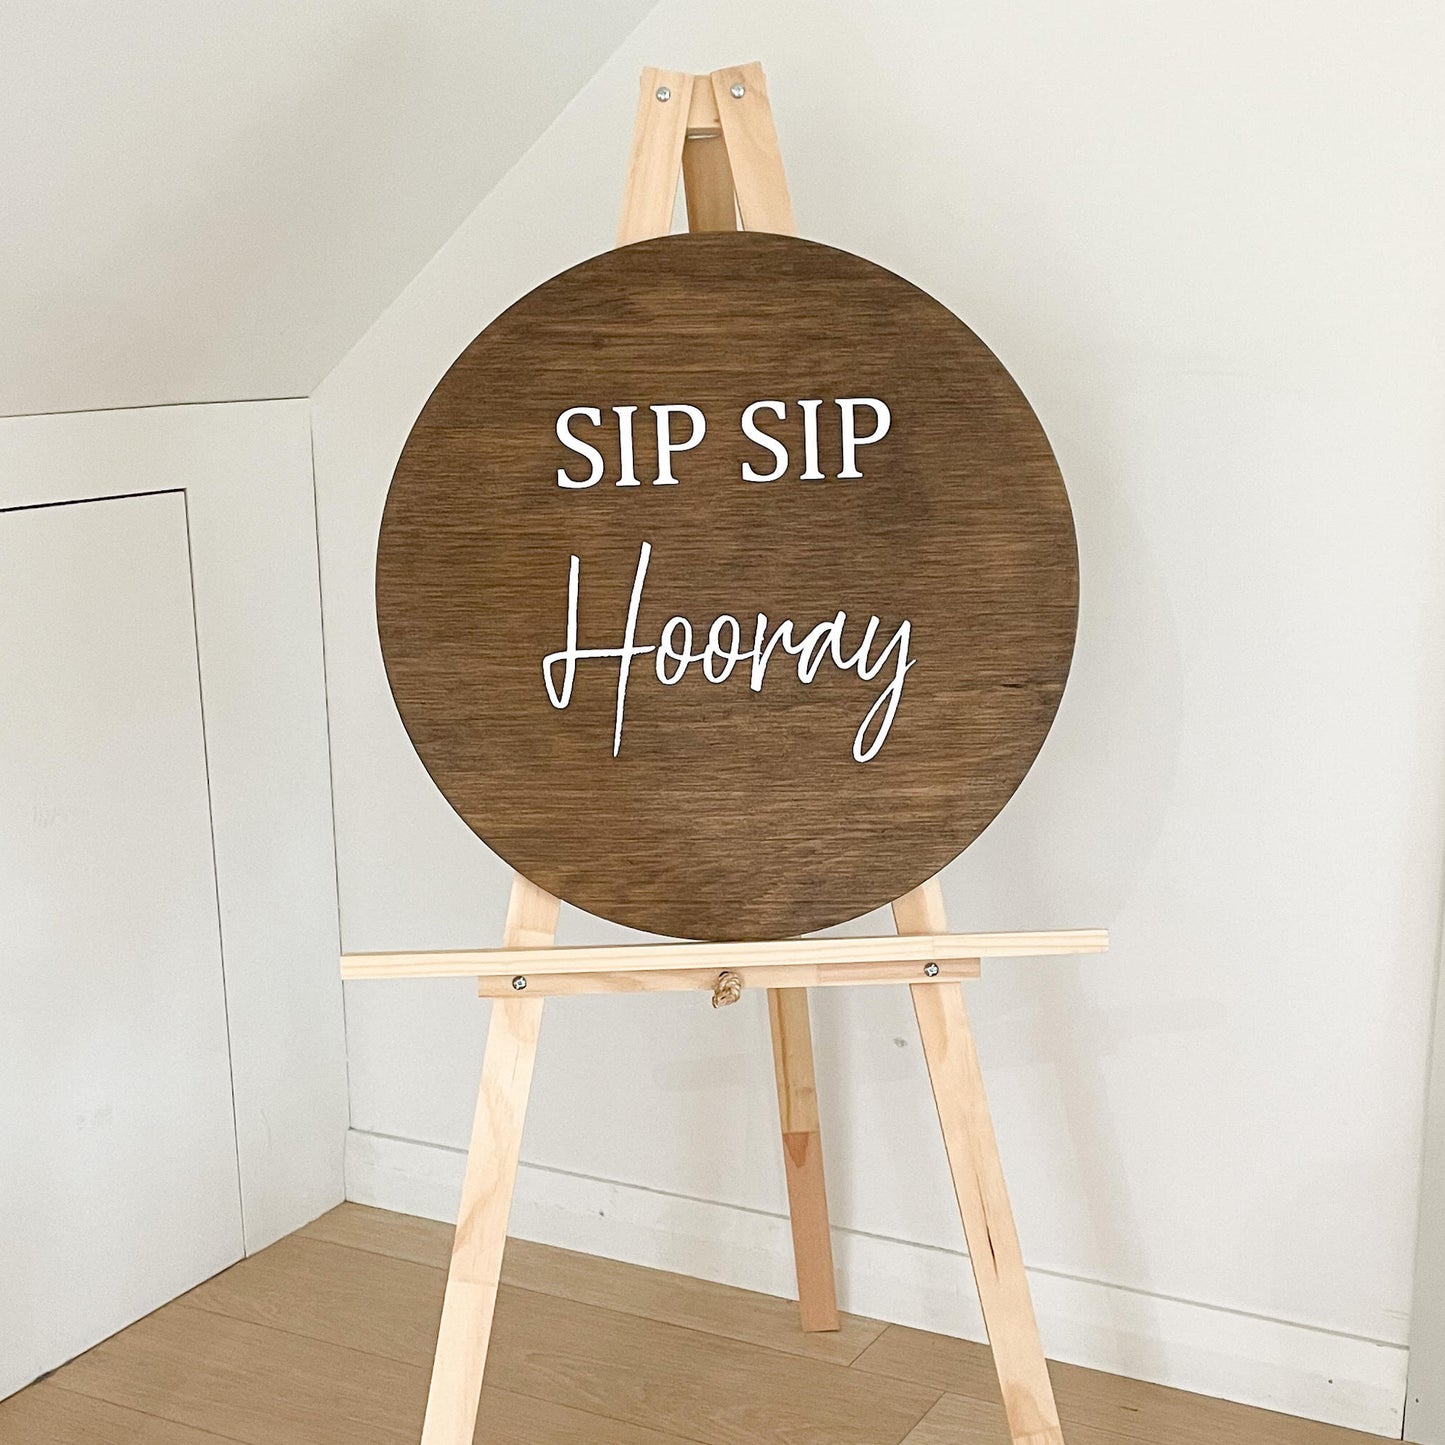 Sip sip hooray on round sign 